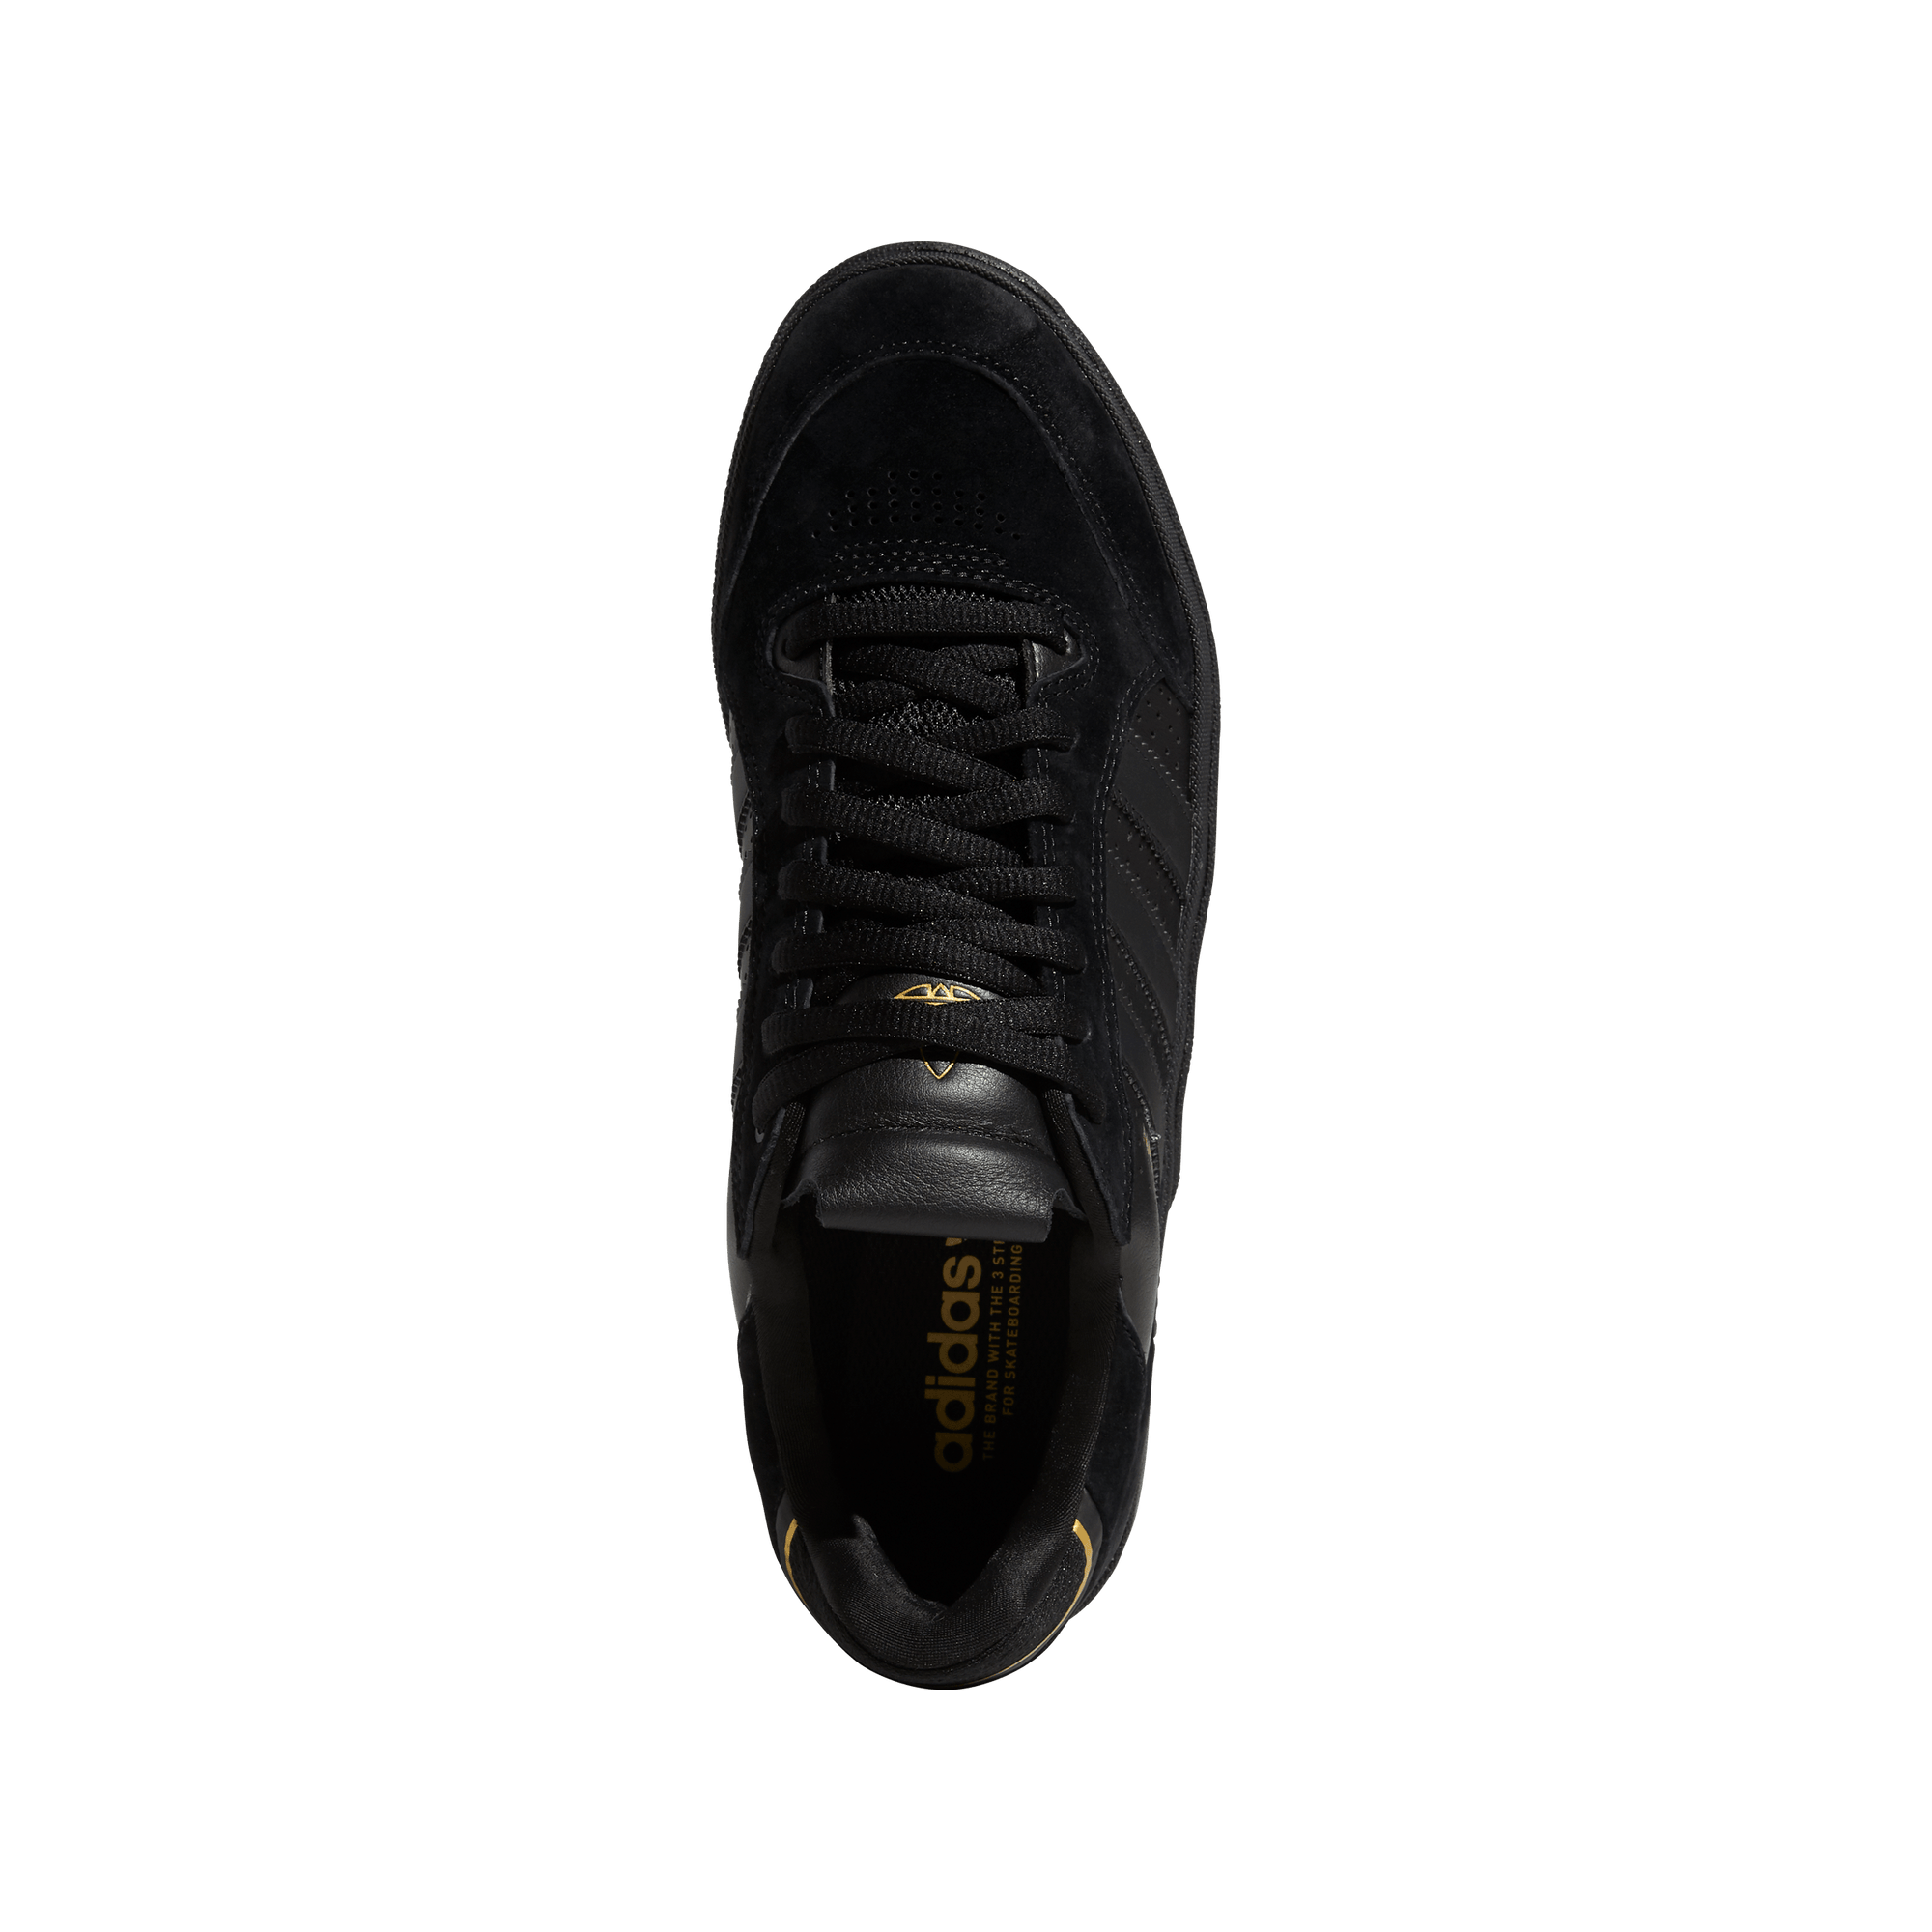 ADIDAS Tyshawn Low Shoes Core Black/Core Black/Gold Metallic Men's Skate Shoes Adidas 